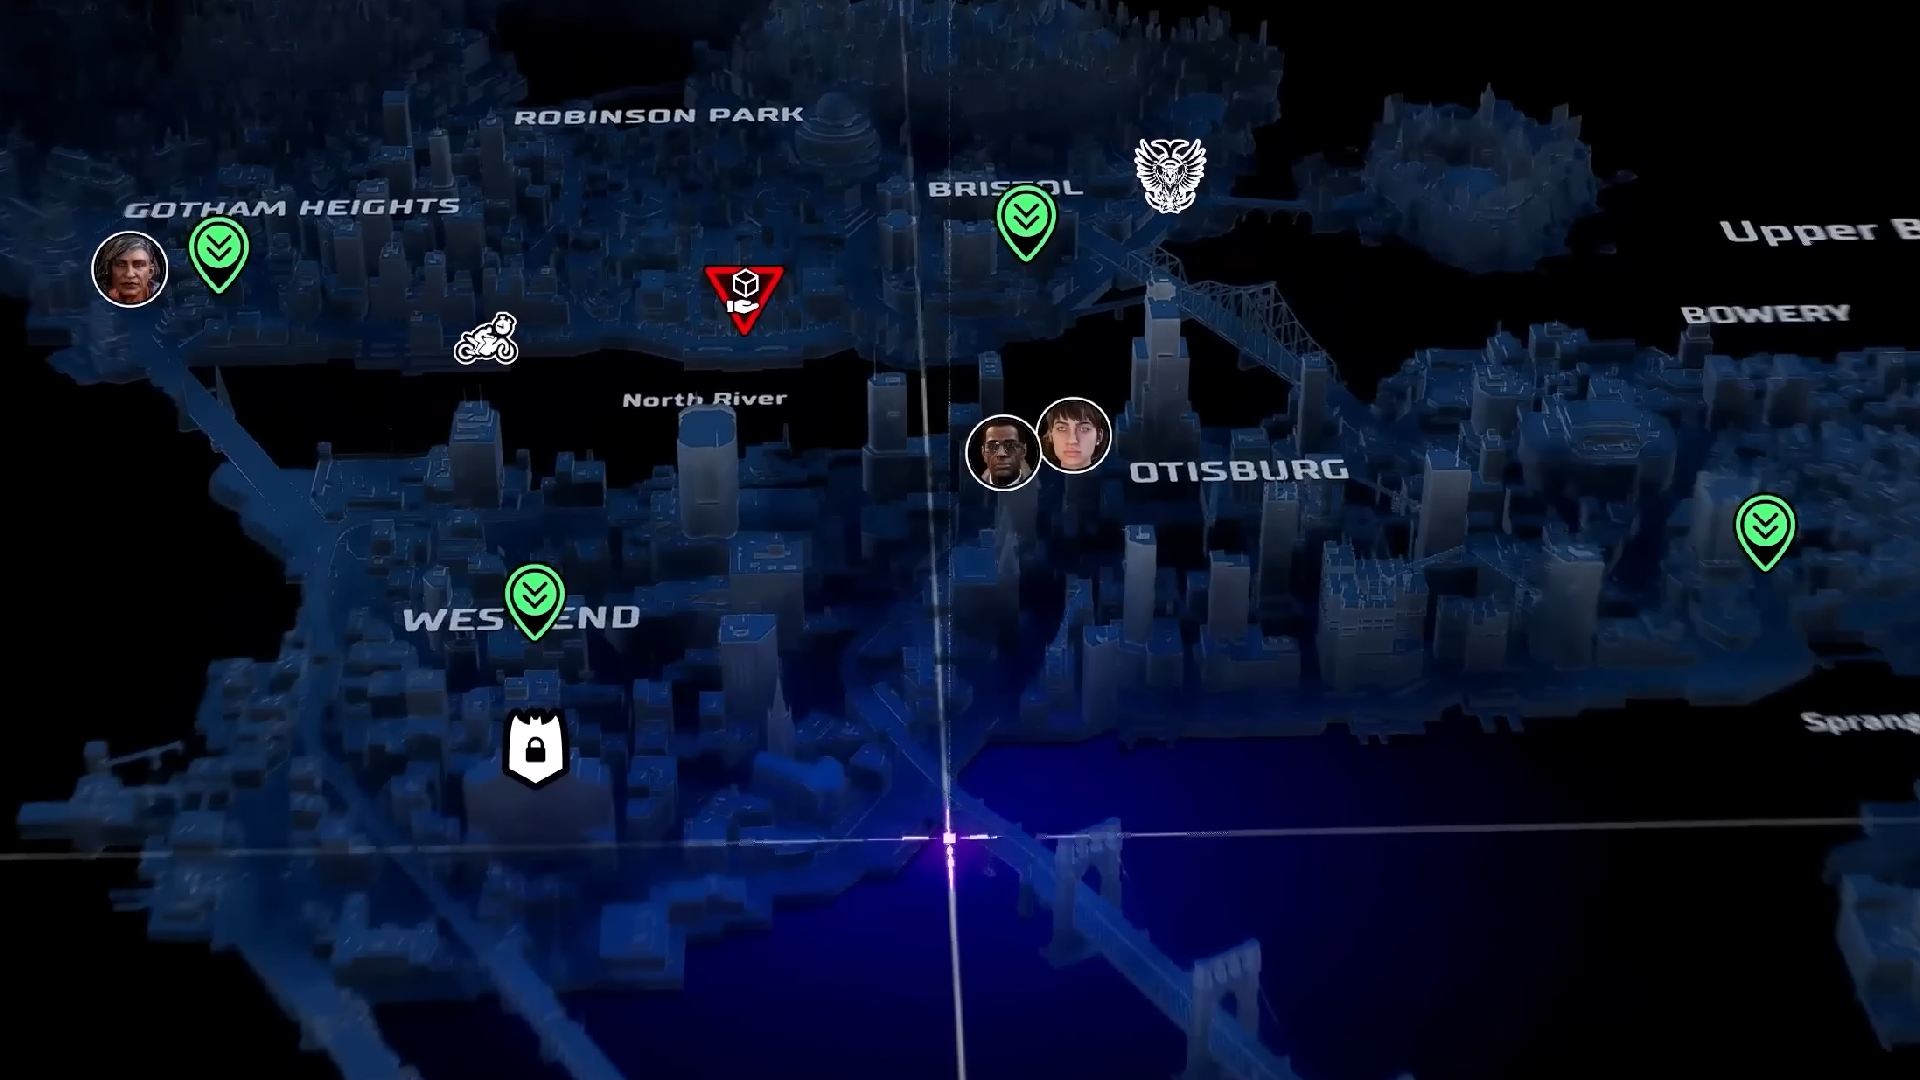 How To Find All Gotham Landmarks In Gotham Knights